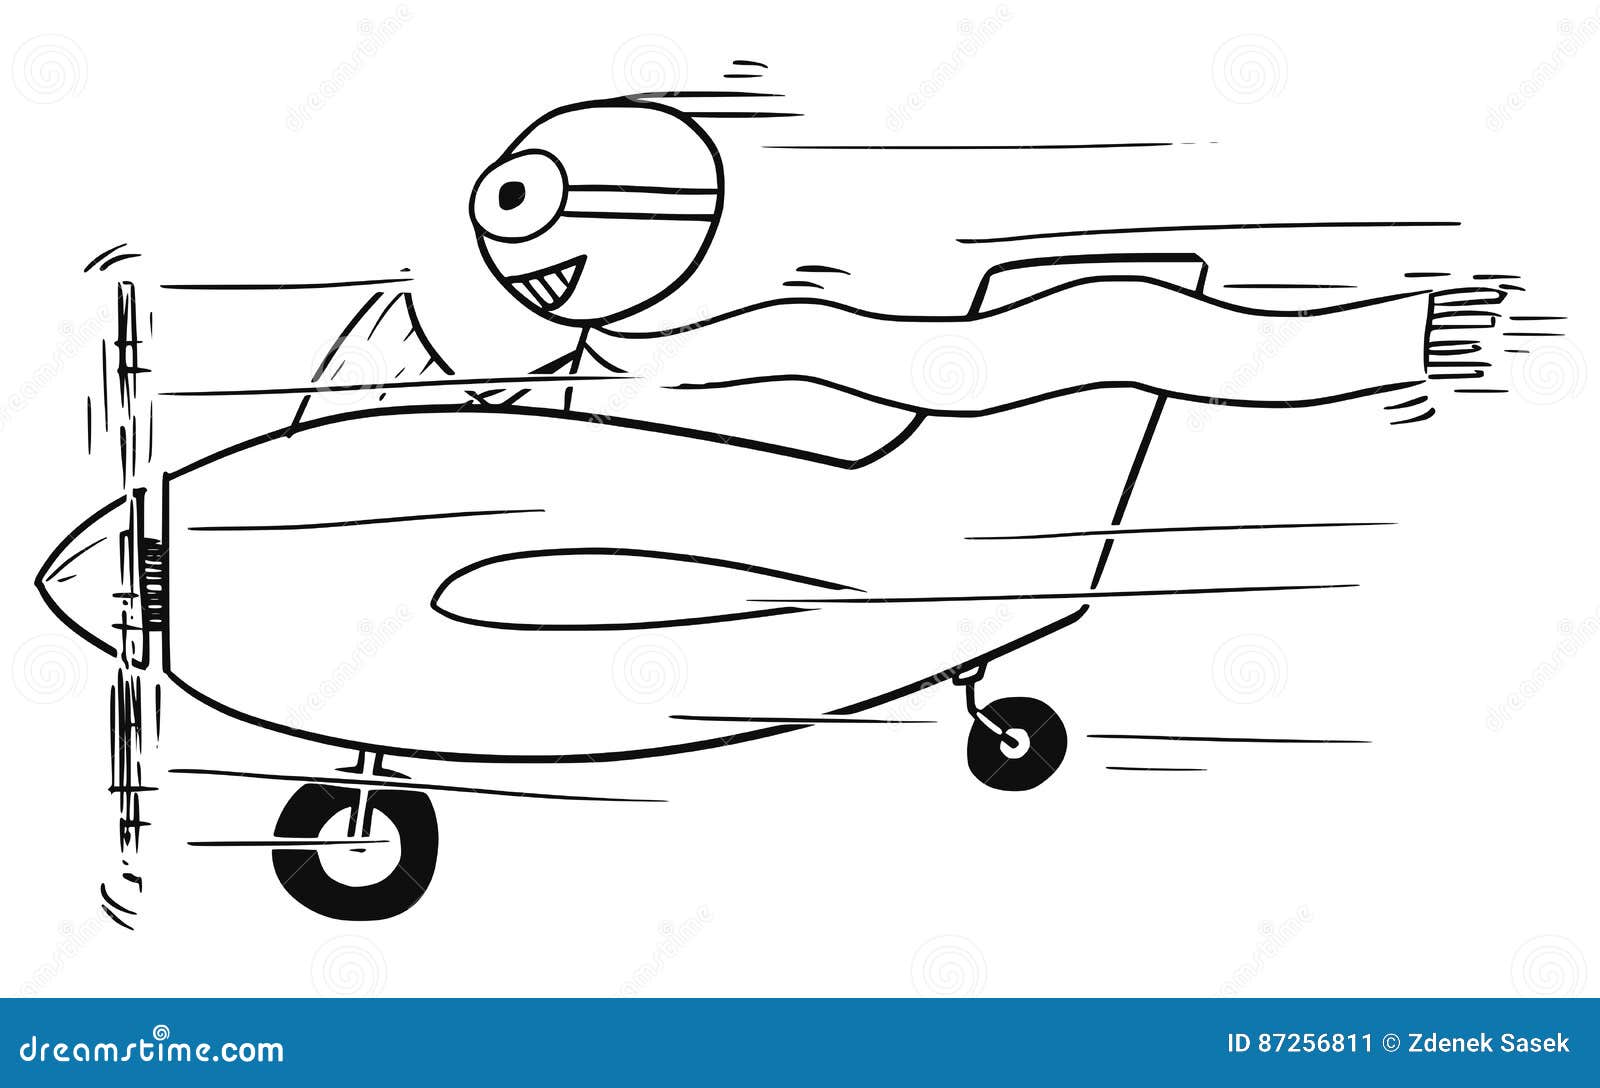  stickman cartoon of smiling man flying small aircraft